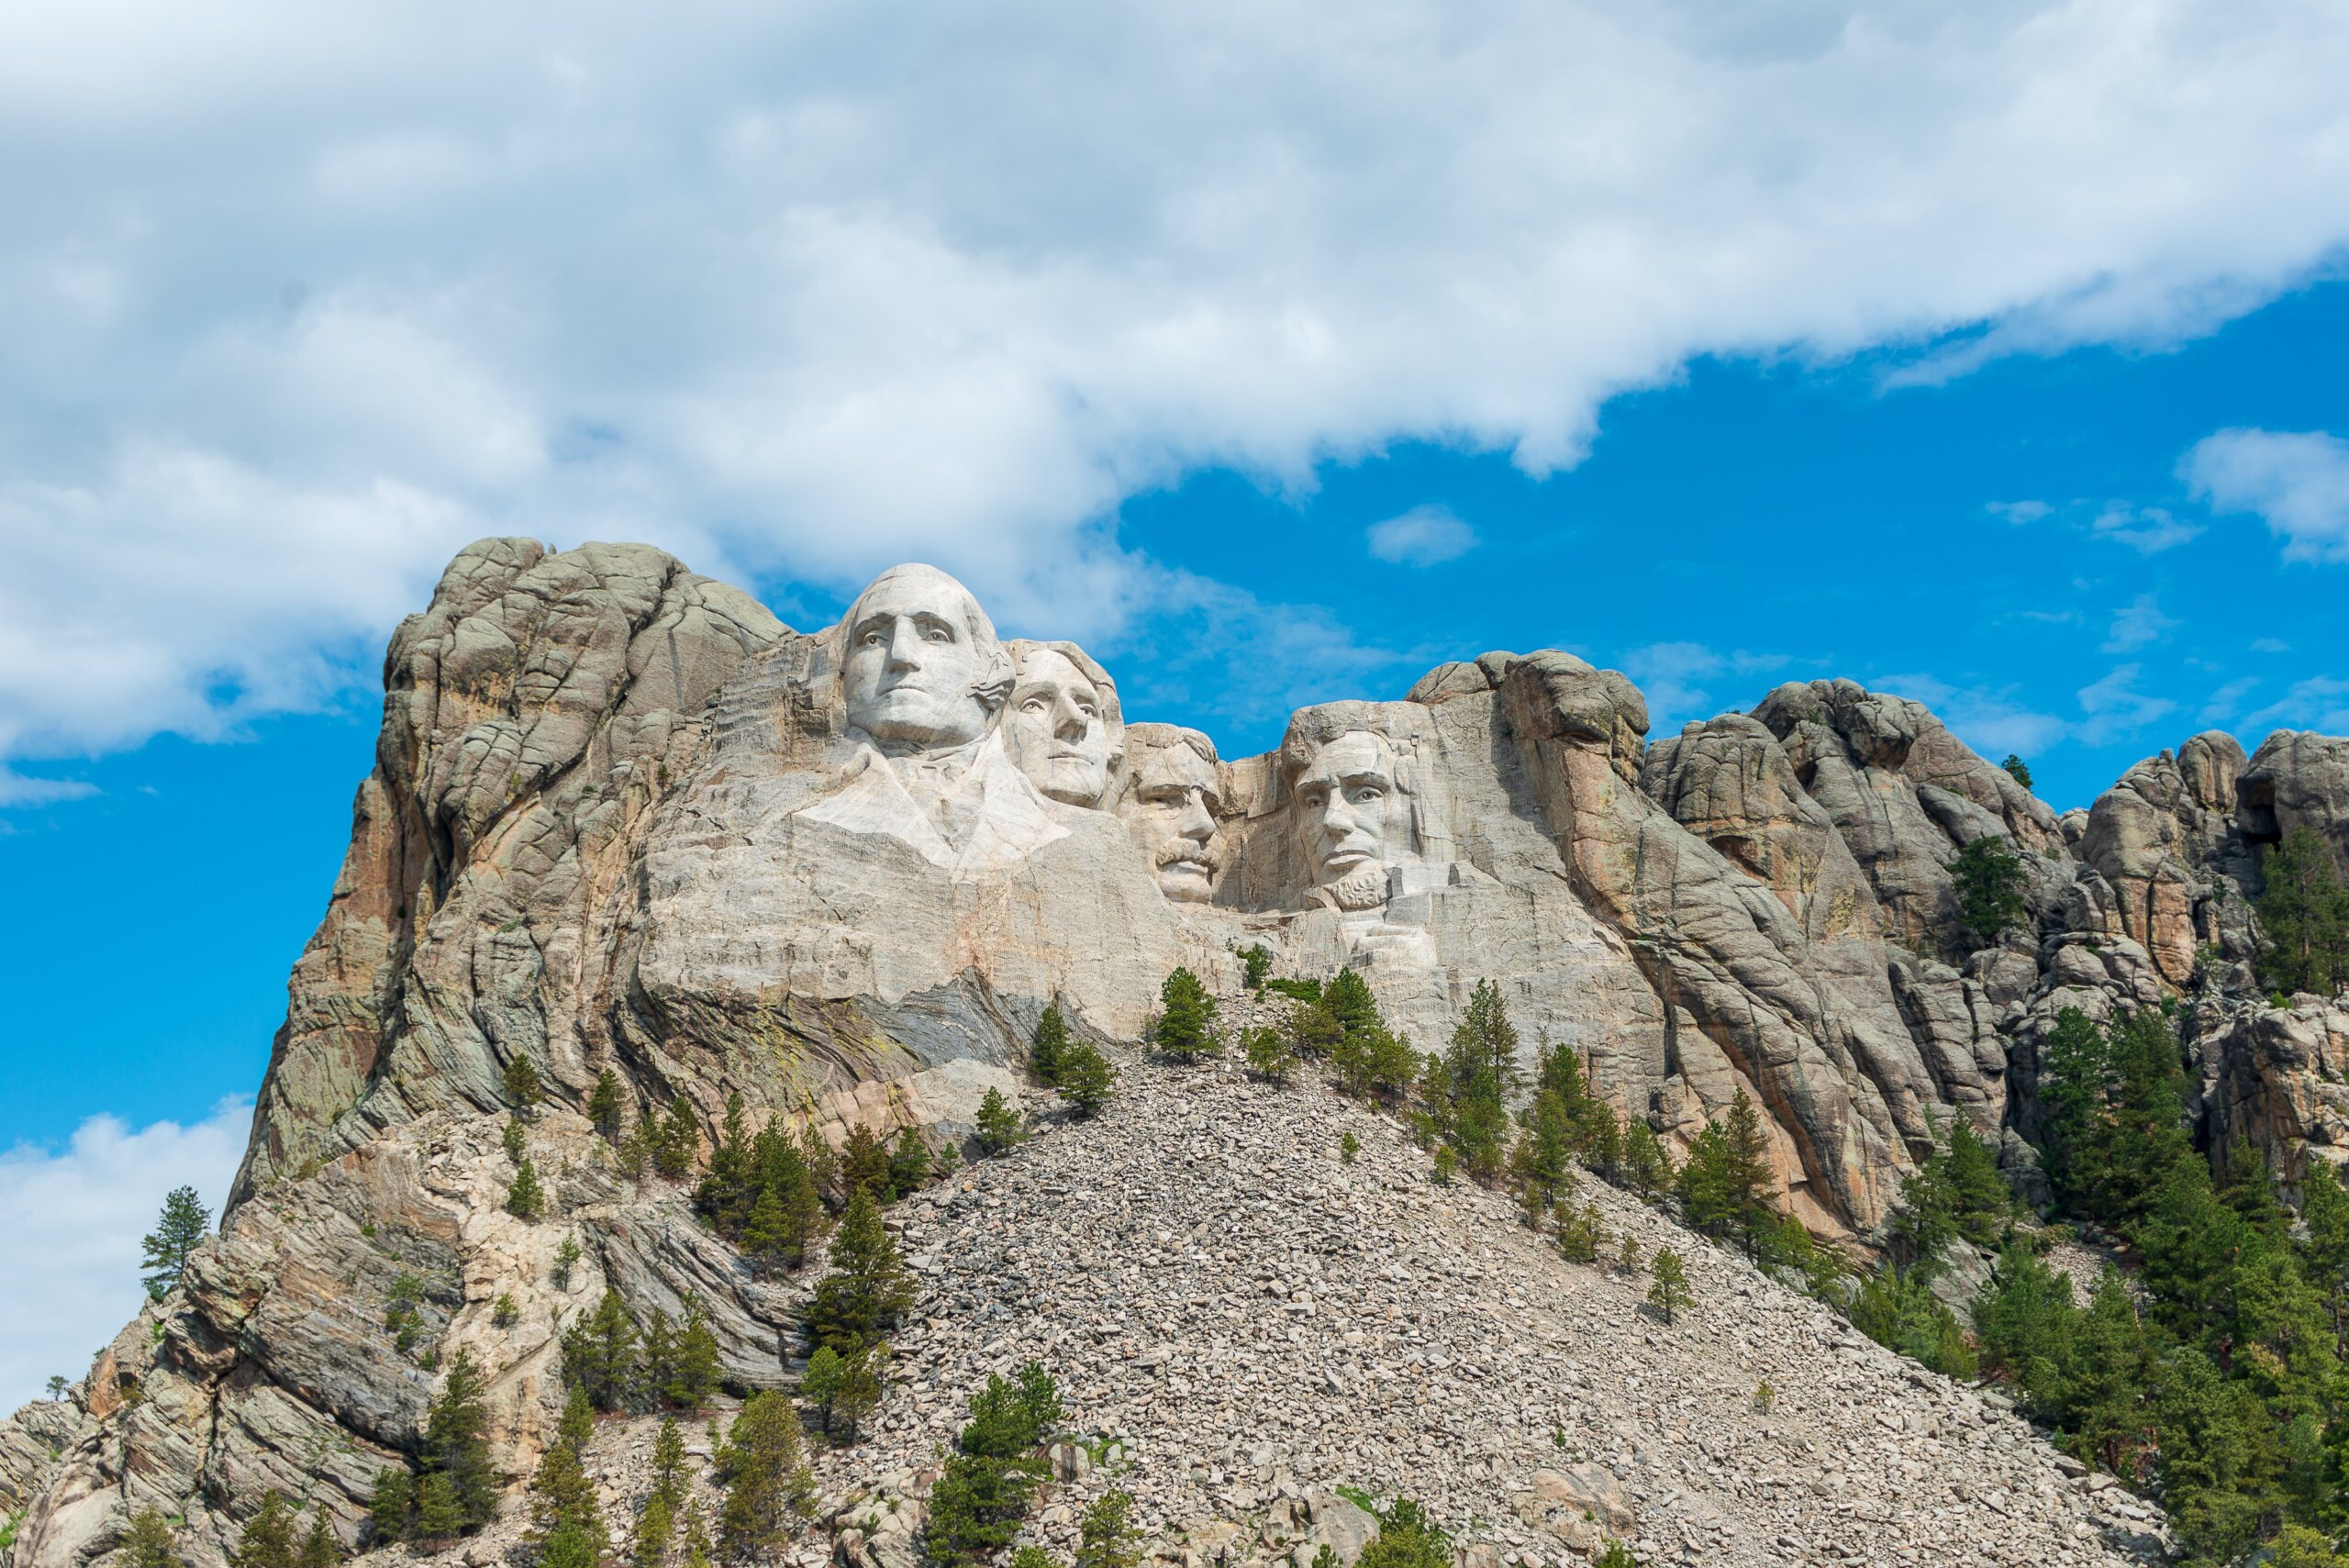 Mt. Rushmore in South Dakota